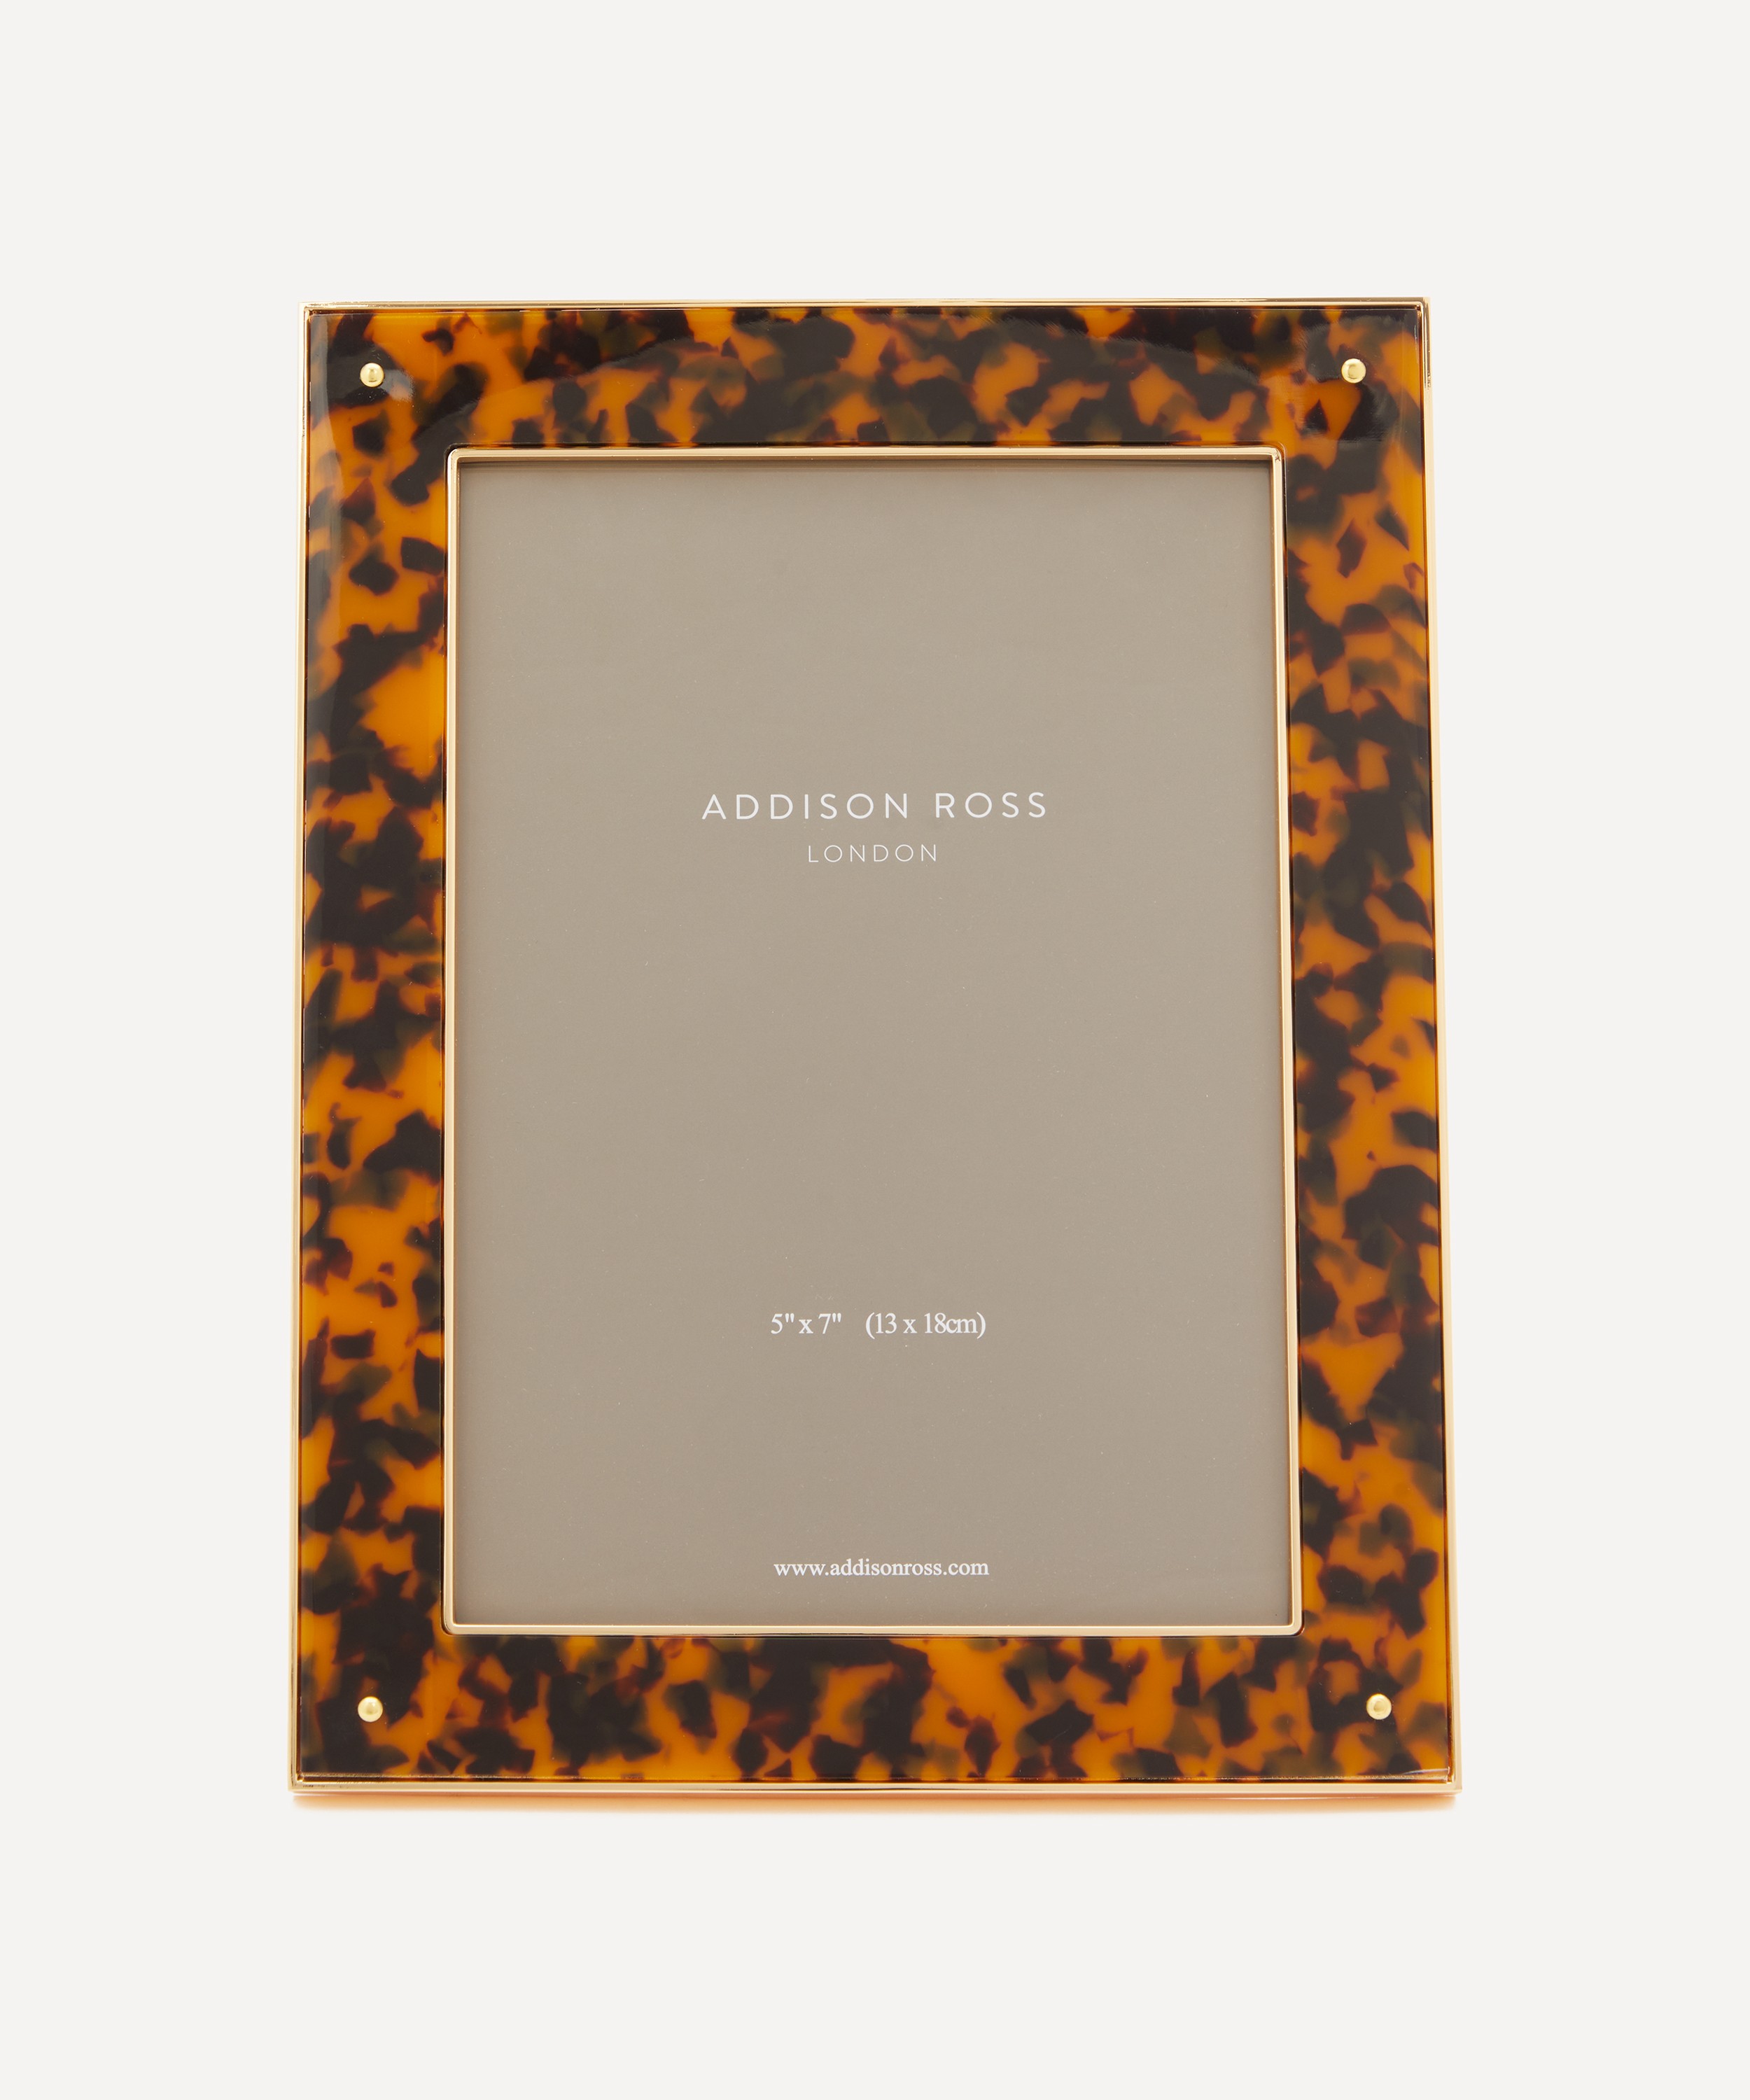 Addison Ross - Tortoiseshell and Gold 5x7” Photo Frame